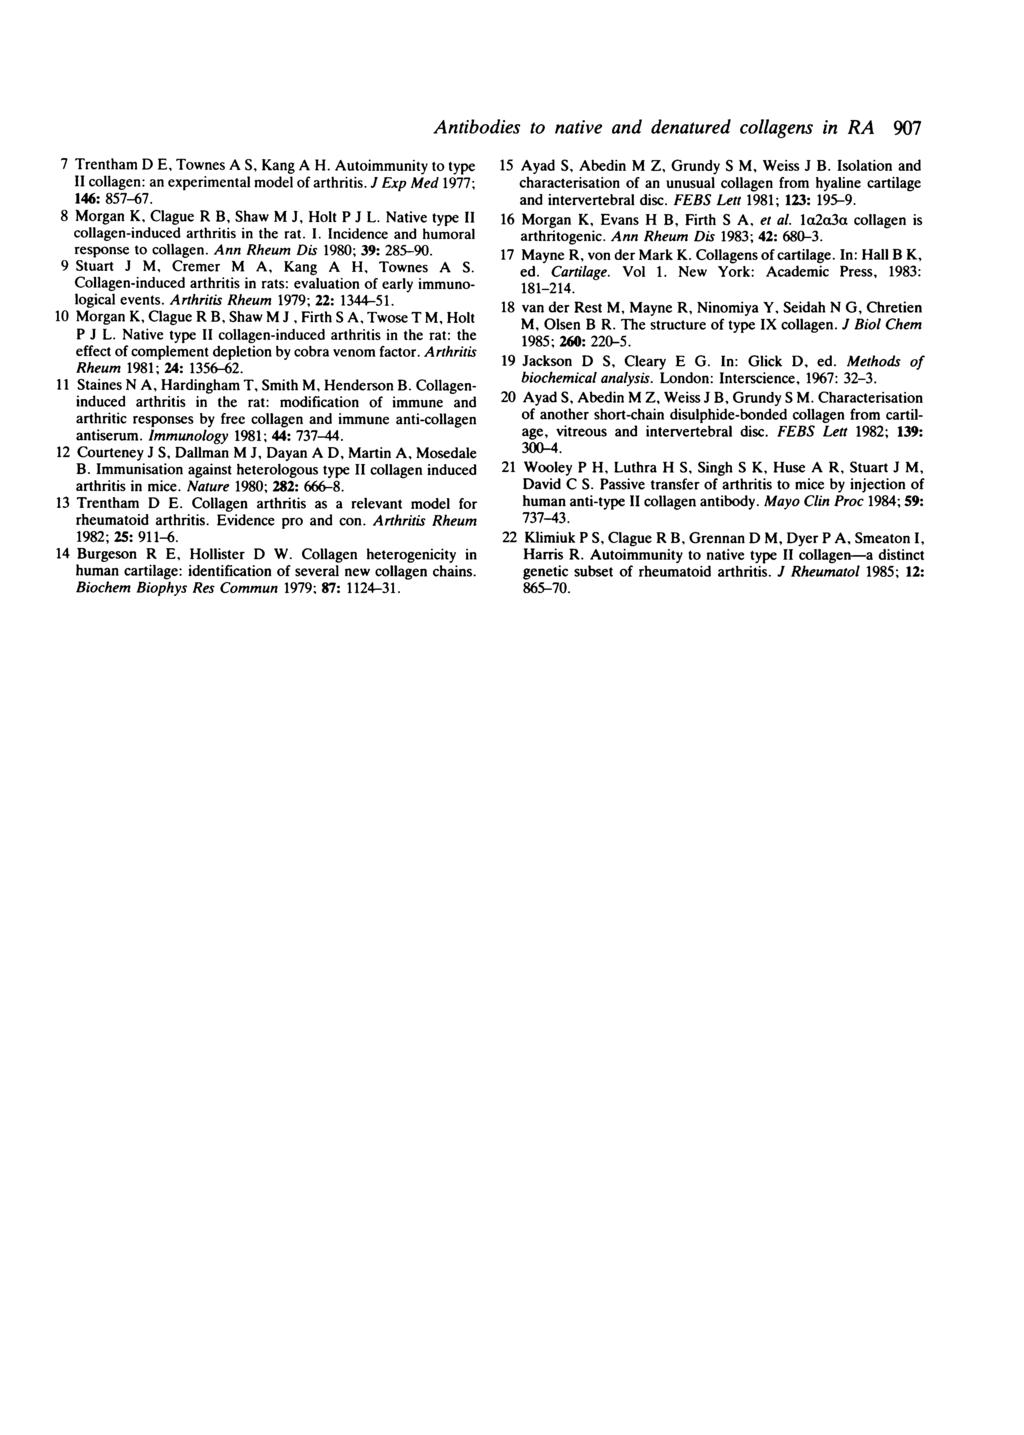 7 Trentham D E, Townes A S, Kang A H. Autoimmunity to type II collagen: an experimental model of arthritis. J Exp Med 1977; 146: 857-67. 8 Morgan K, Clague R B, Shaw M J, Holt P J L.